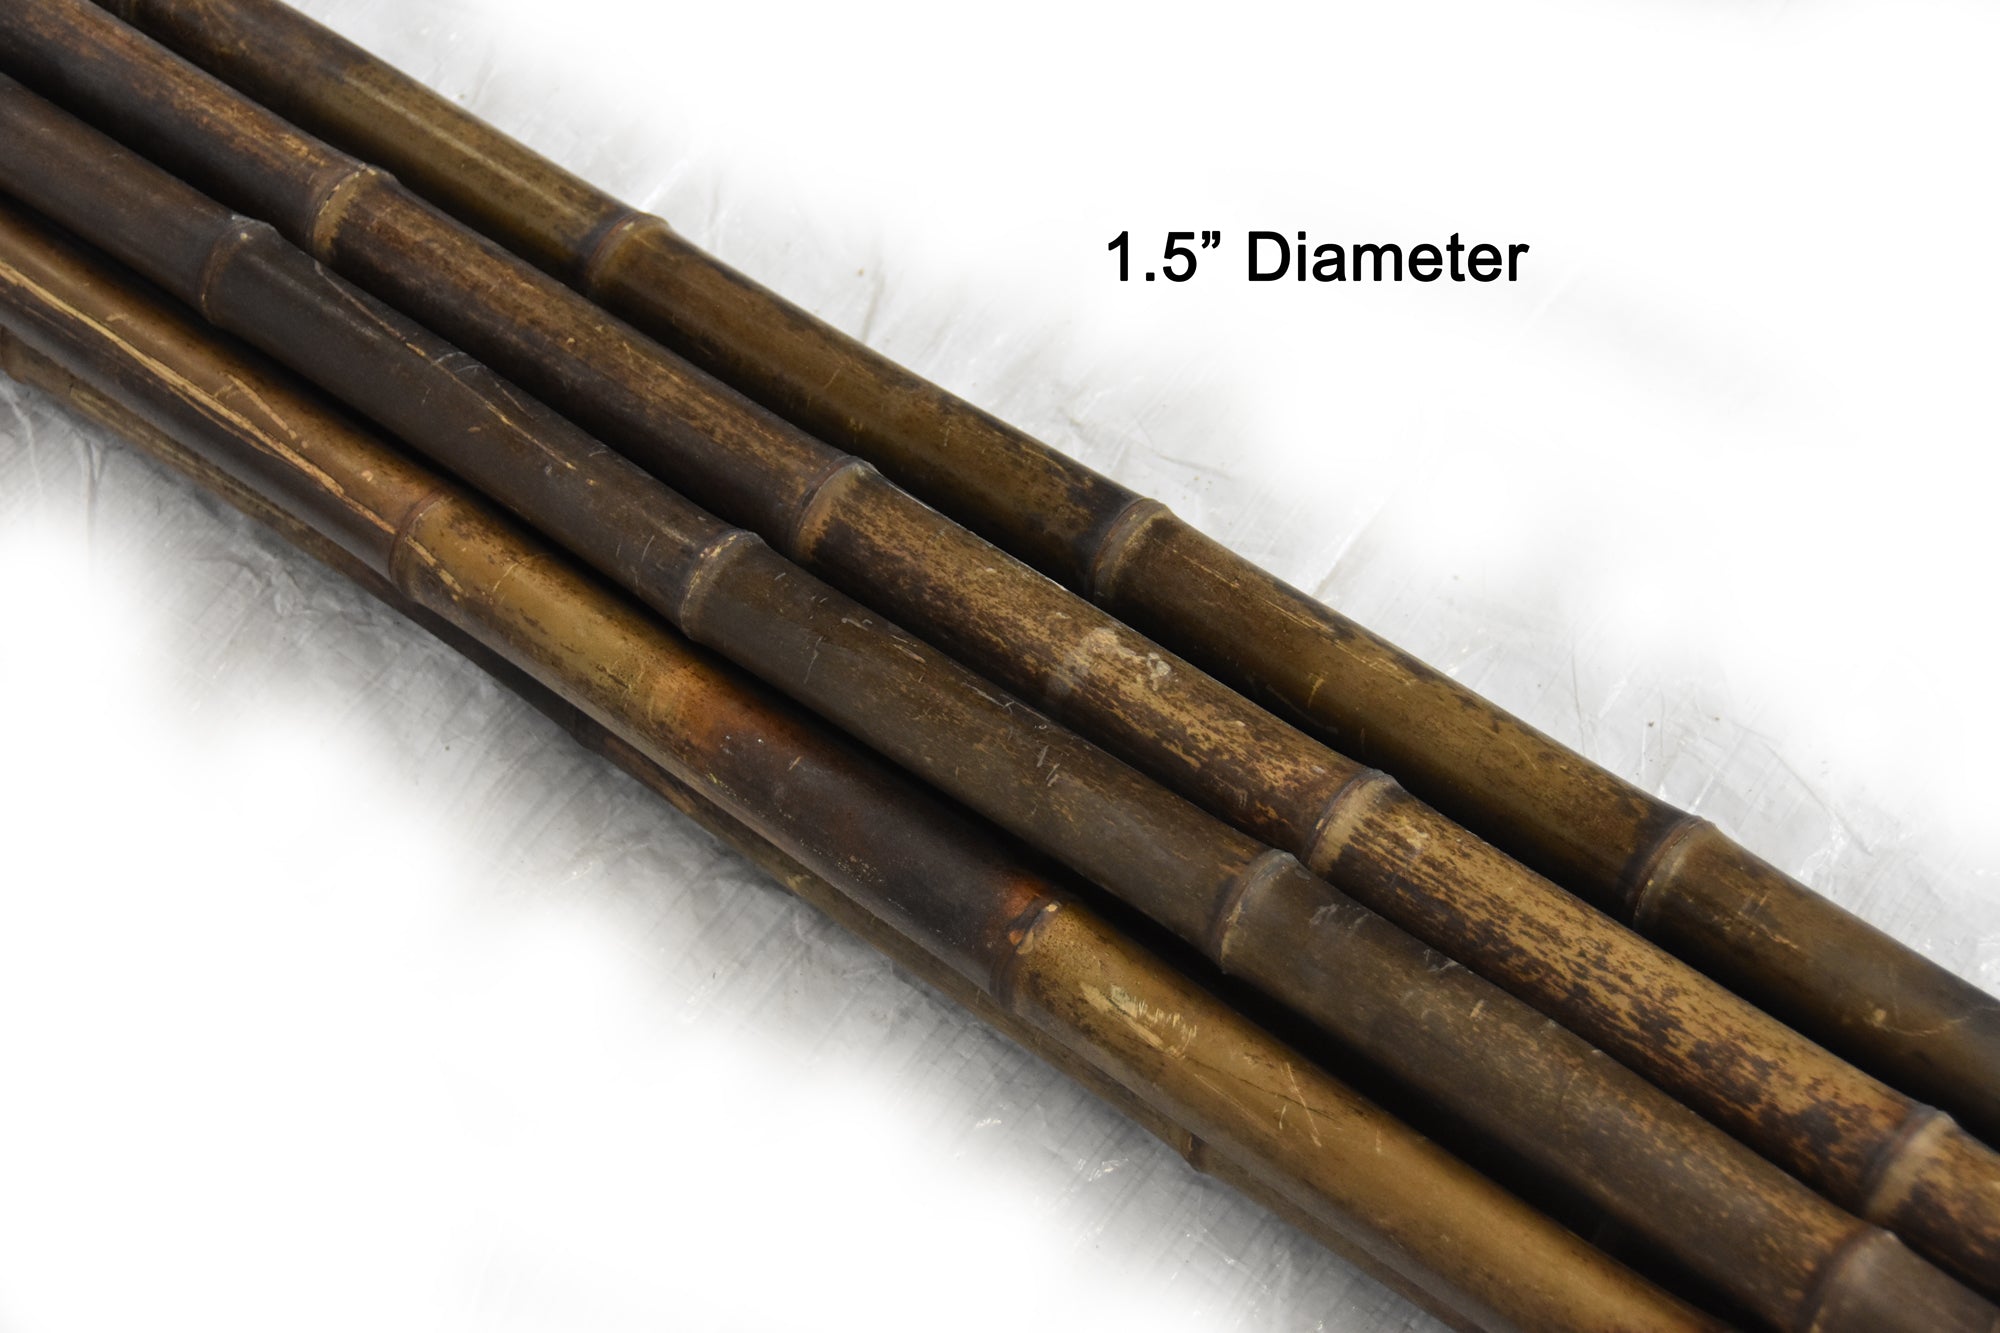 1 - 1-1/2 X 12' Natural Bamboo Poles, Natural Bamboo Sticks